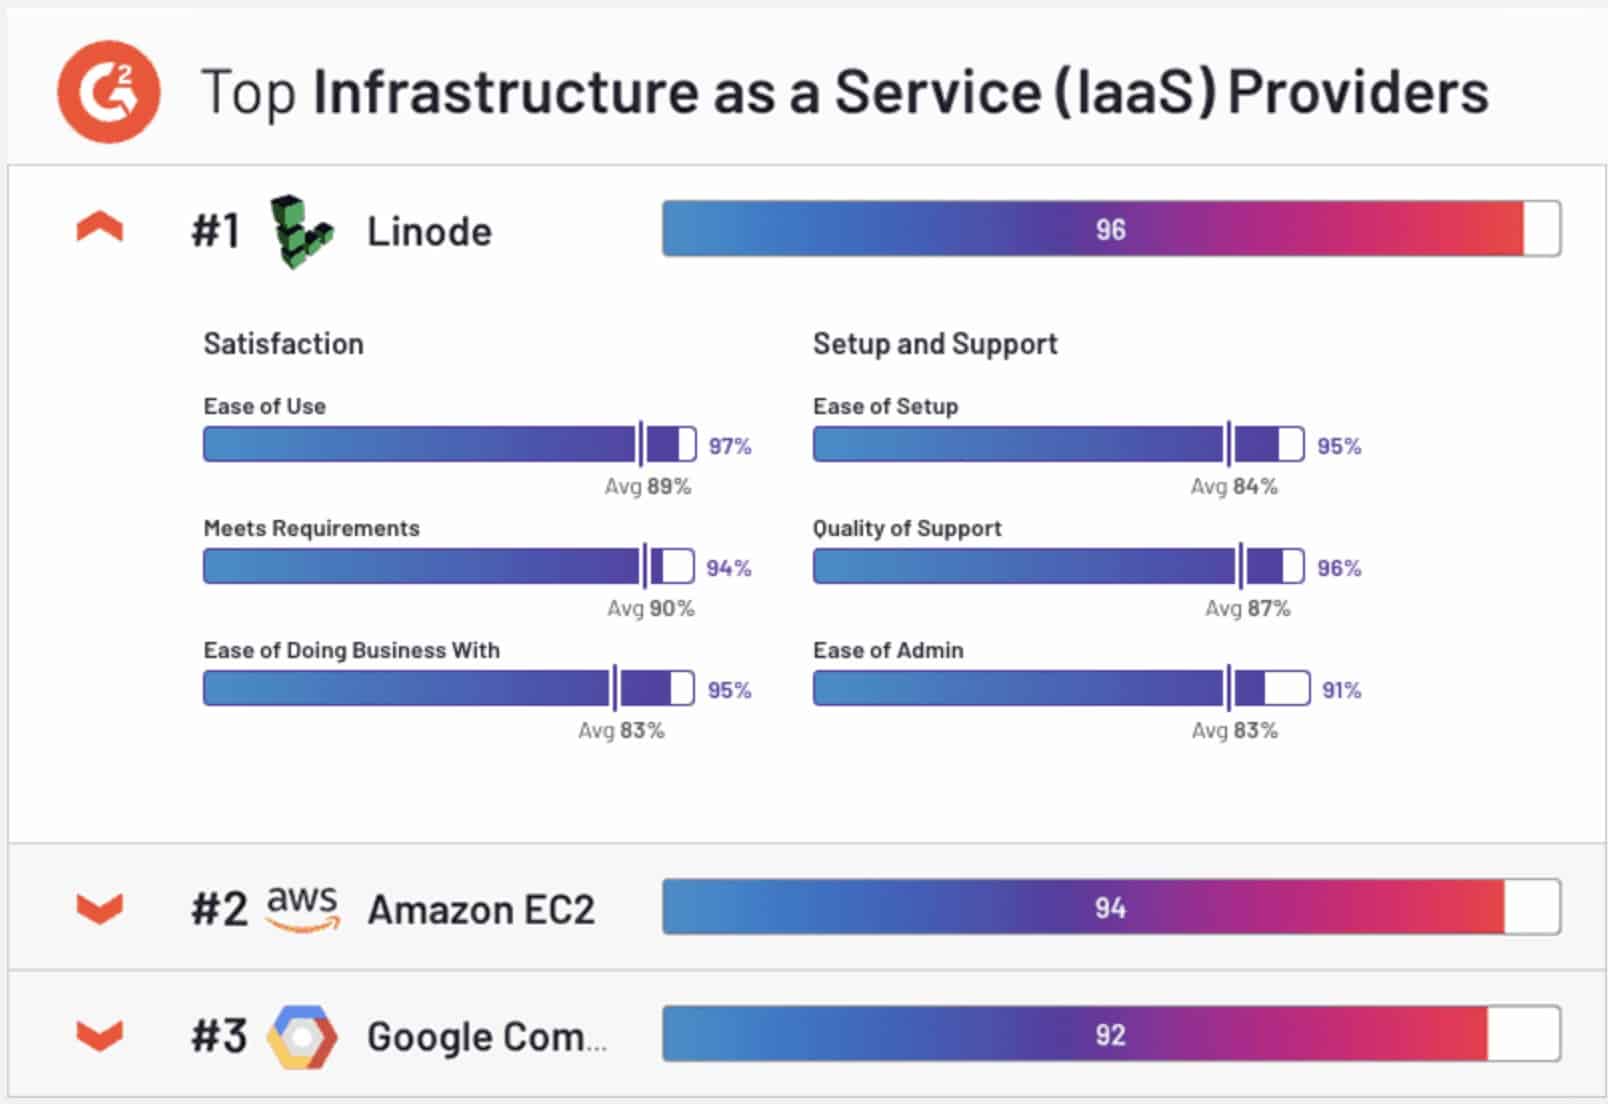 linode - Linode: Come creare un SSD Cloud Server Linux